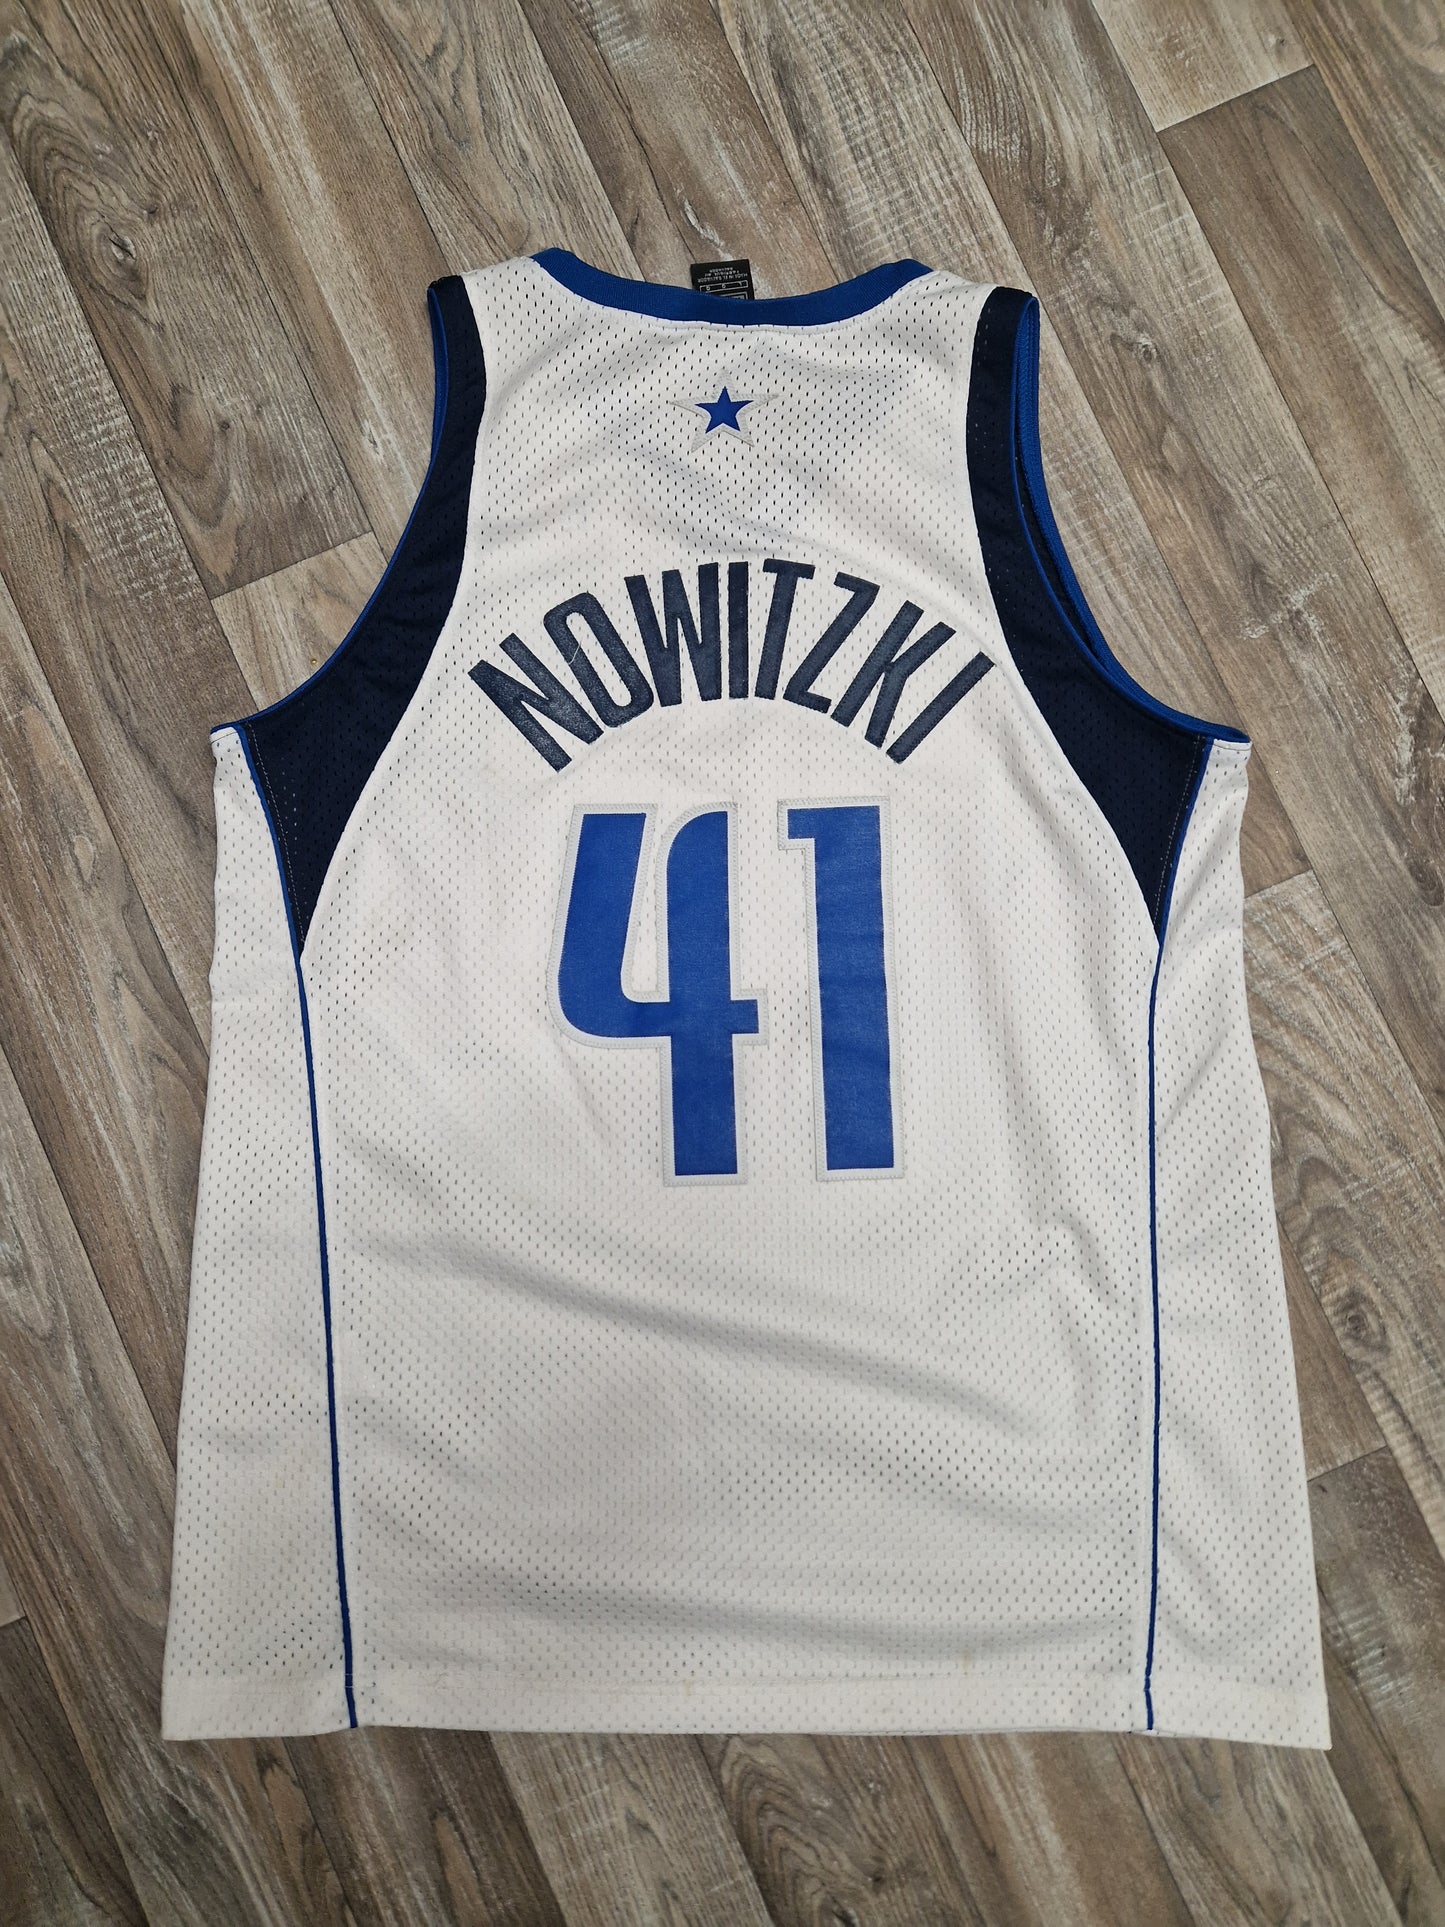 Dirk Nowitzki Dallas Mavericks Jersey Size Large